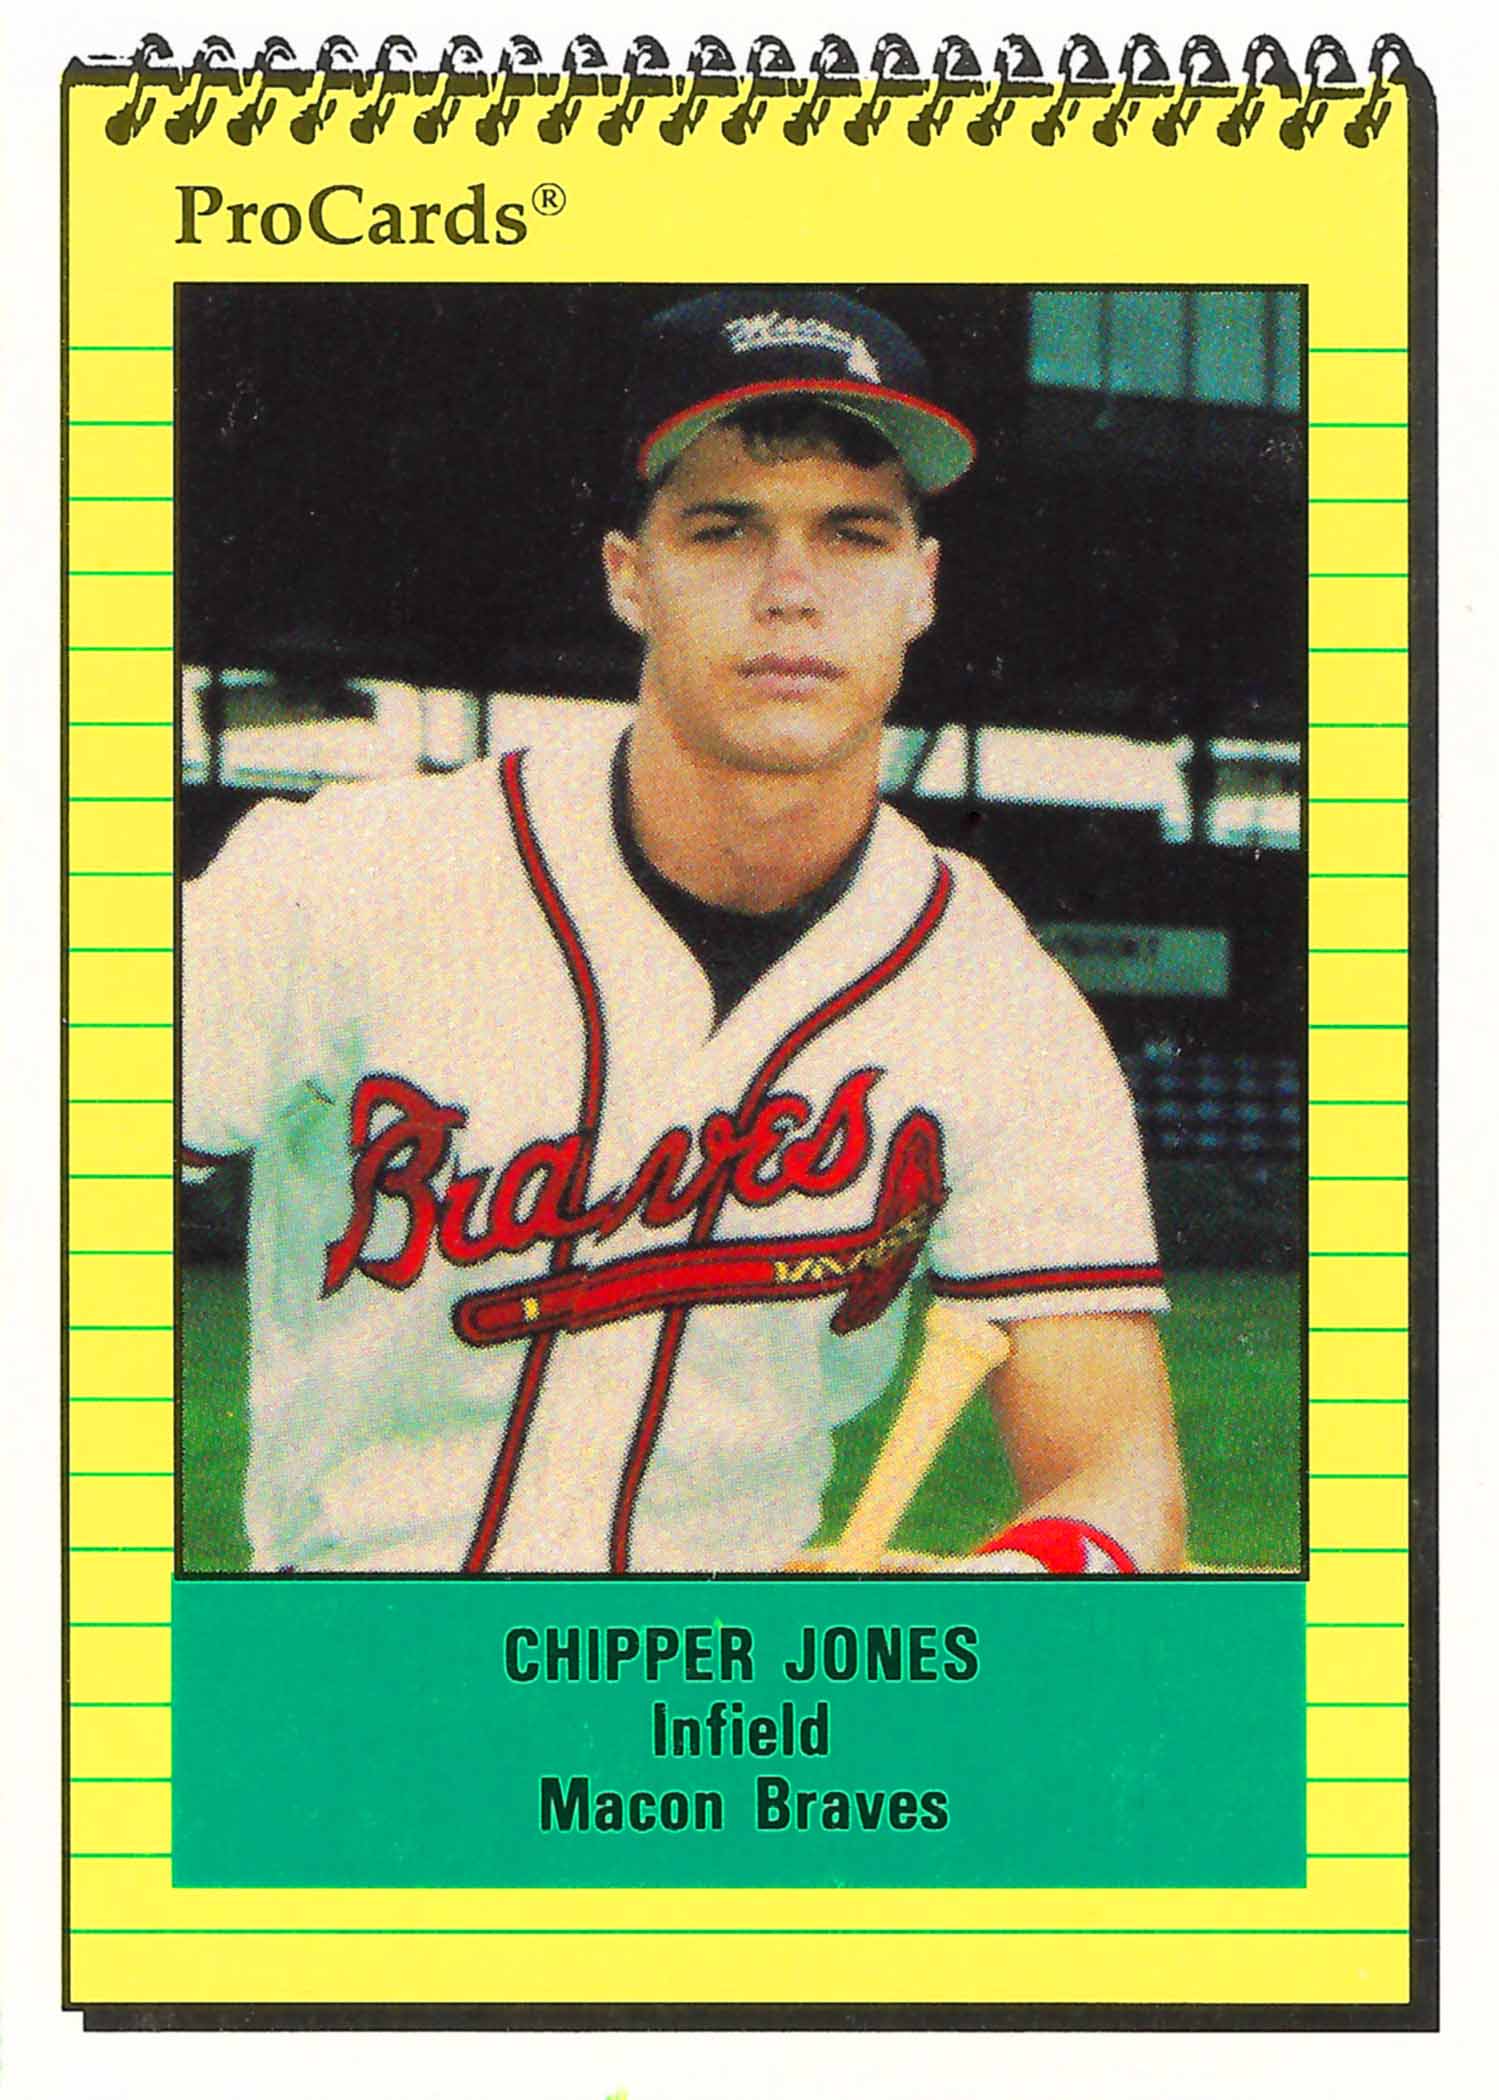 Braves' legend Chipper Jones voted to MLB Hall of Fame